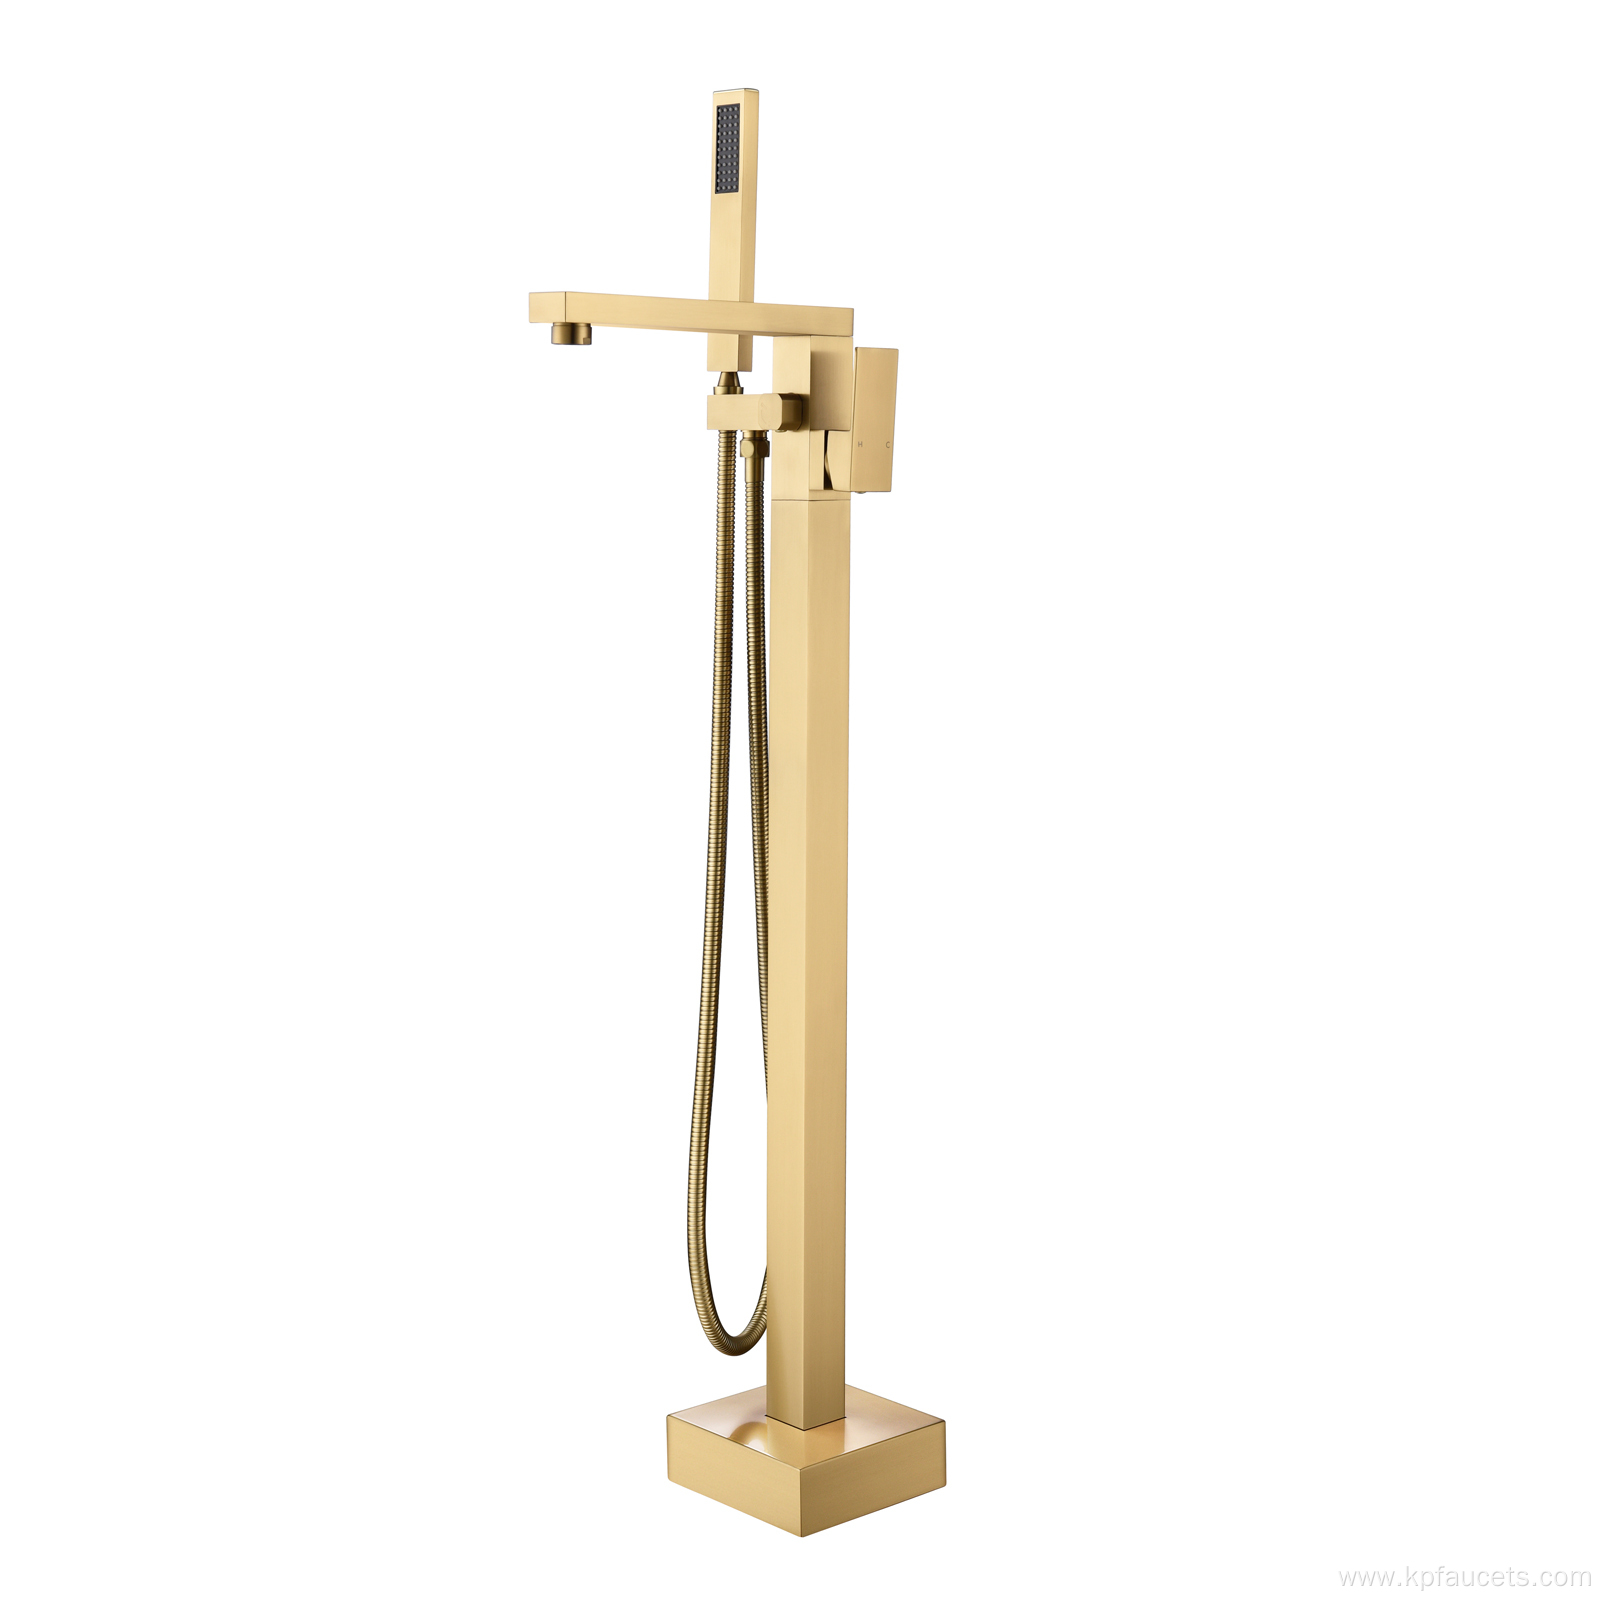 Brushed Gold Floor Freestanding Bathtub Faucet